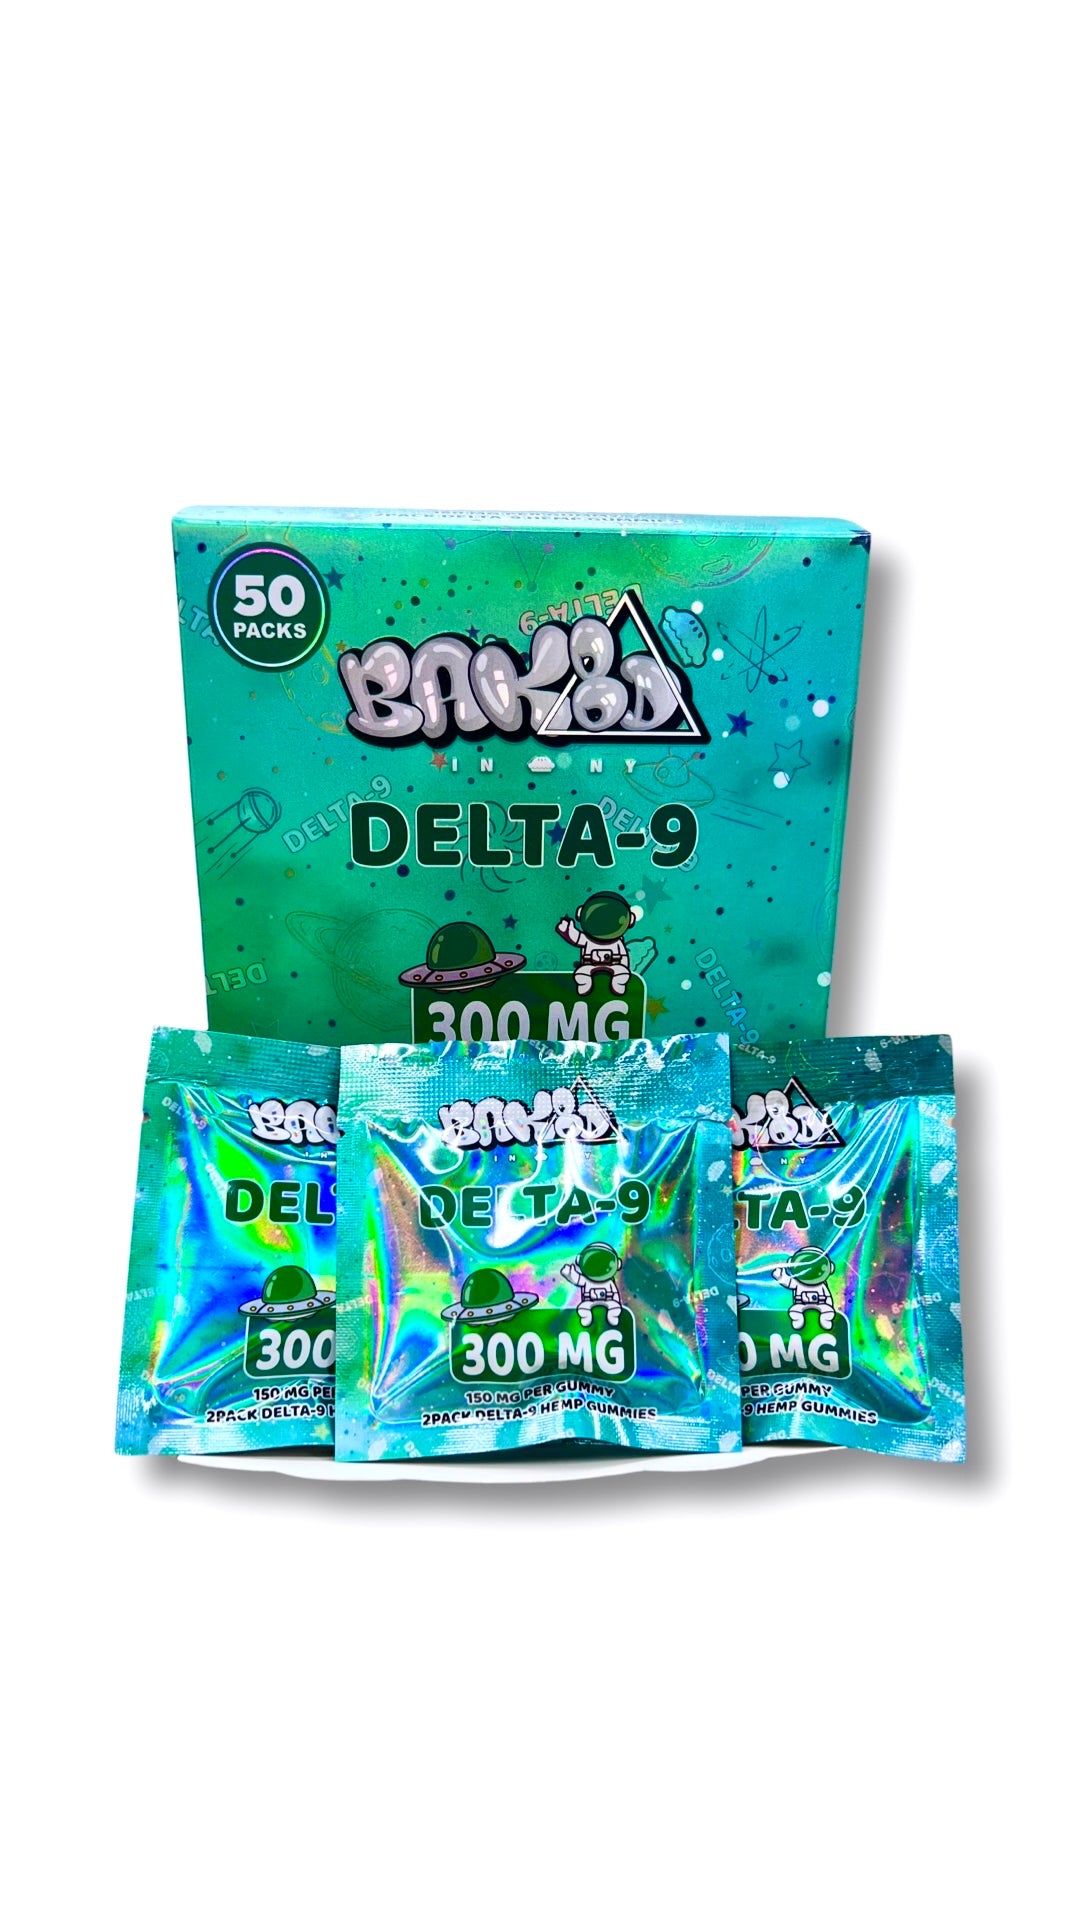 BAK8D Master Blend - Delta 9 - 300mg 2CT Gummies - 2 for $10